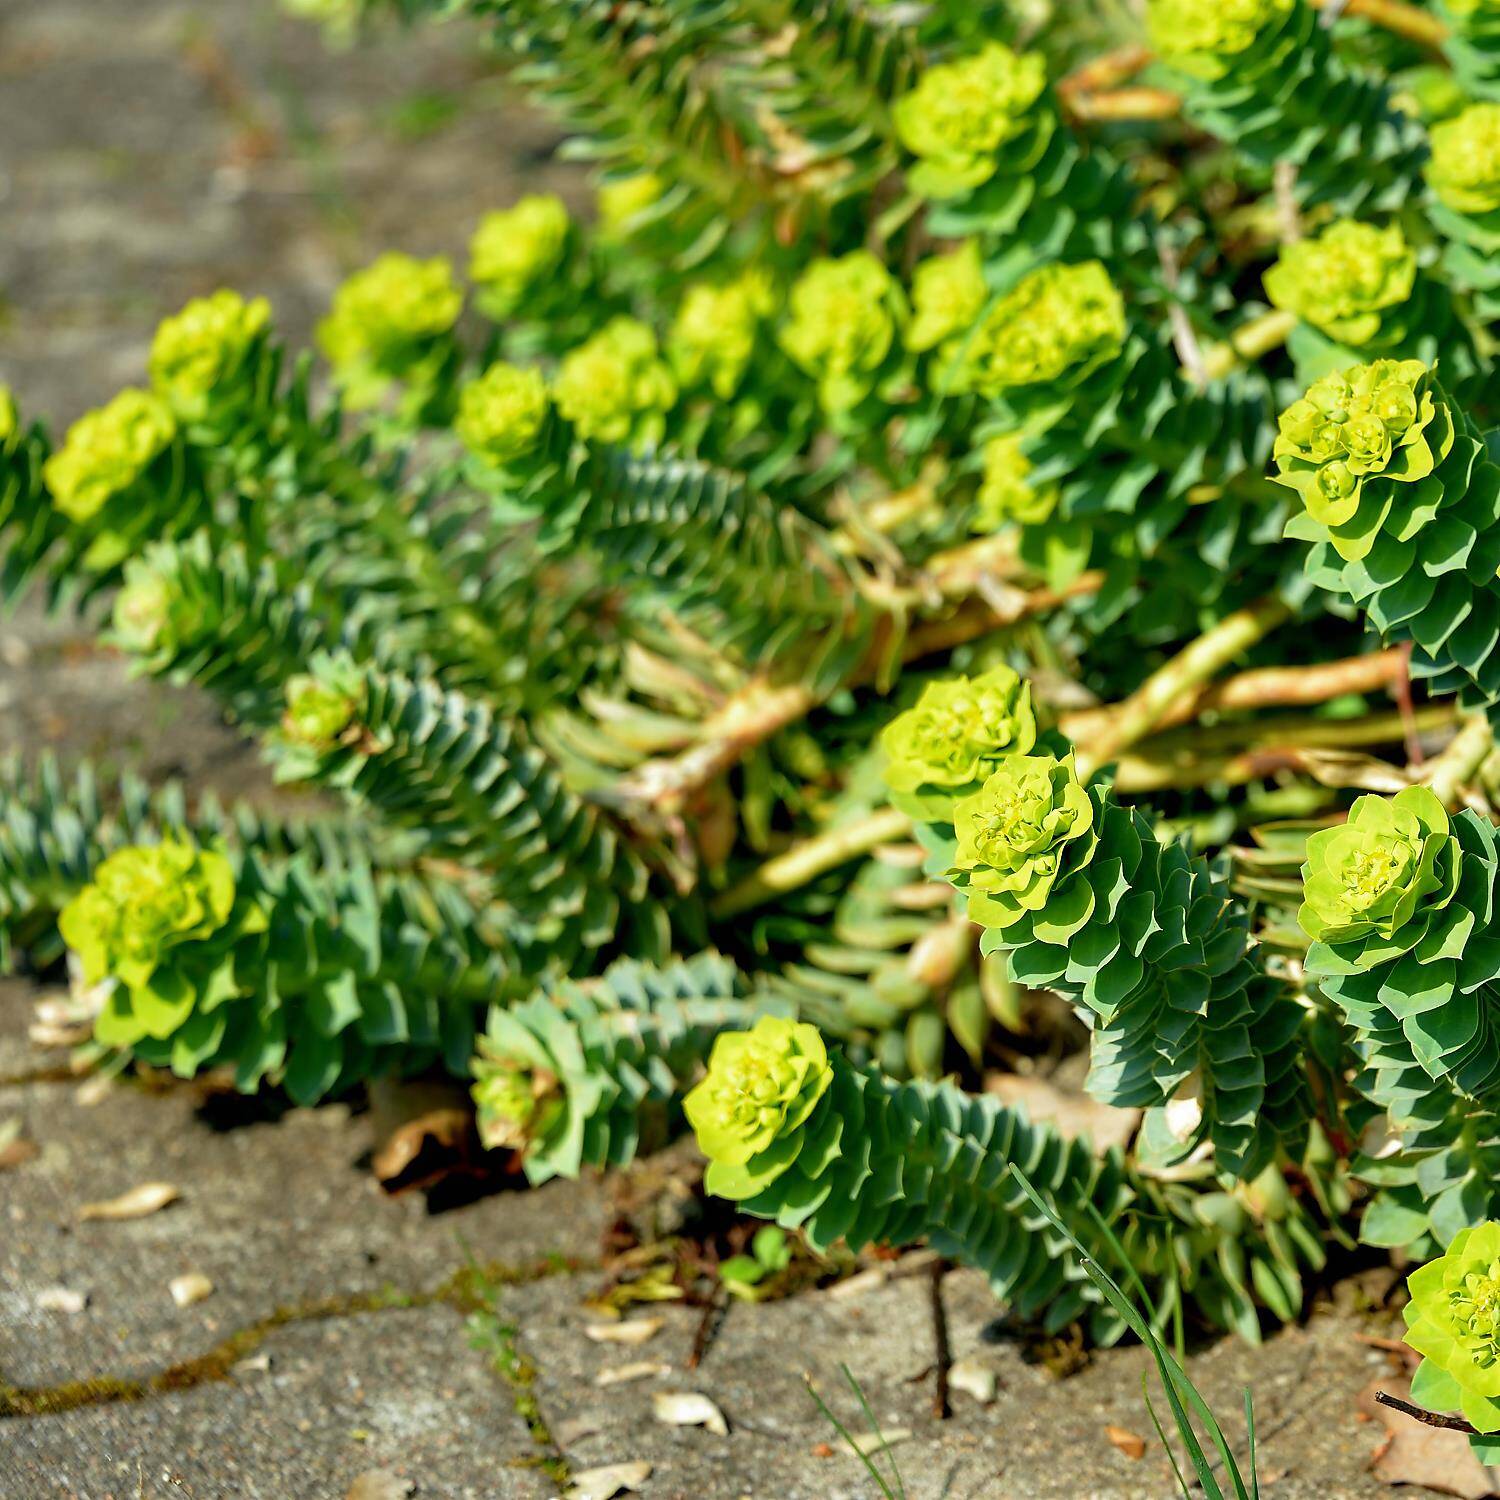  Walzen-Wolfsmilch - Euphorbia myrsinites